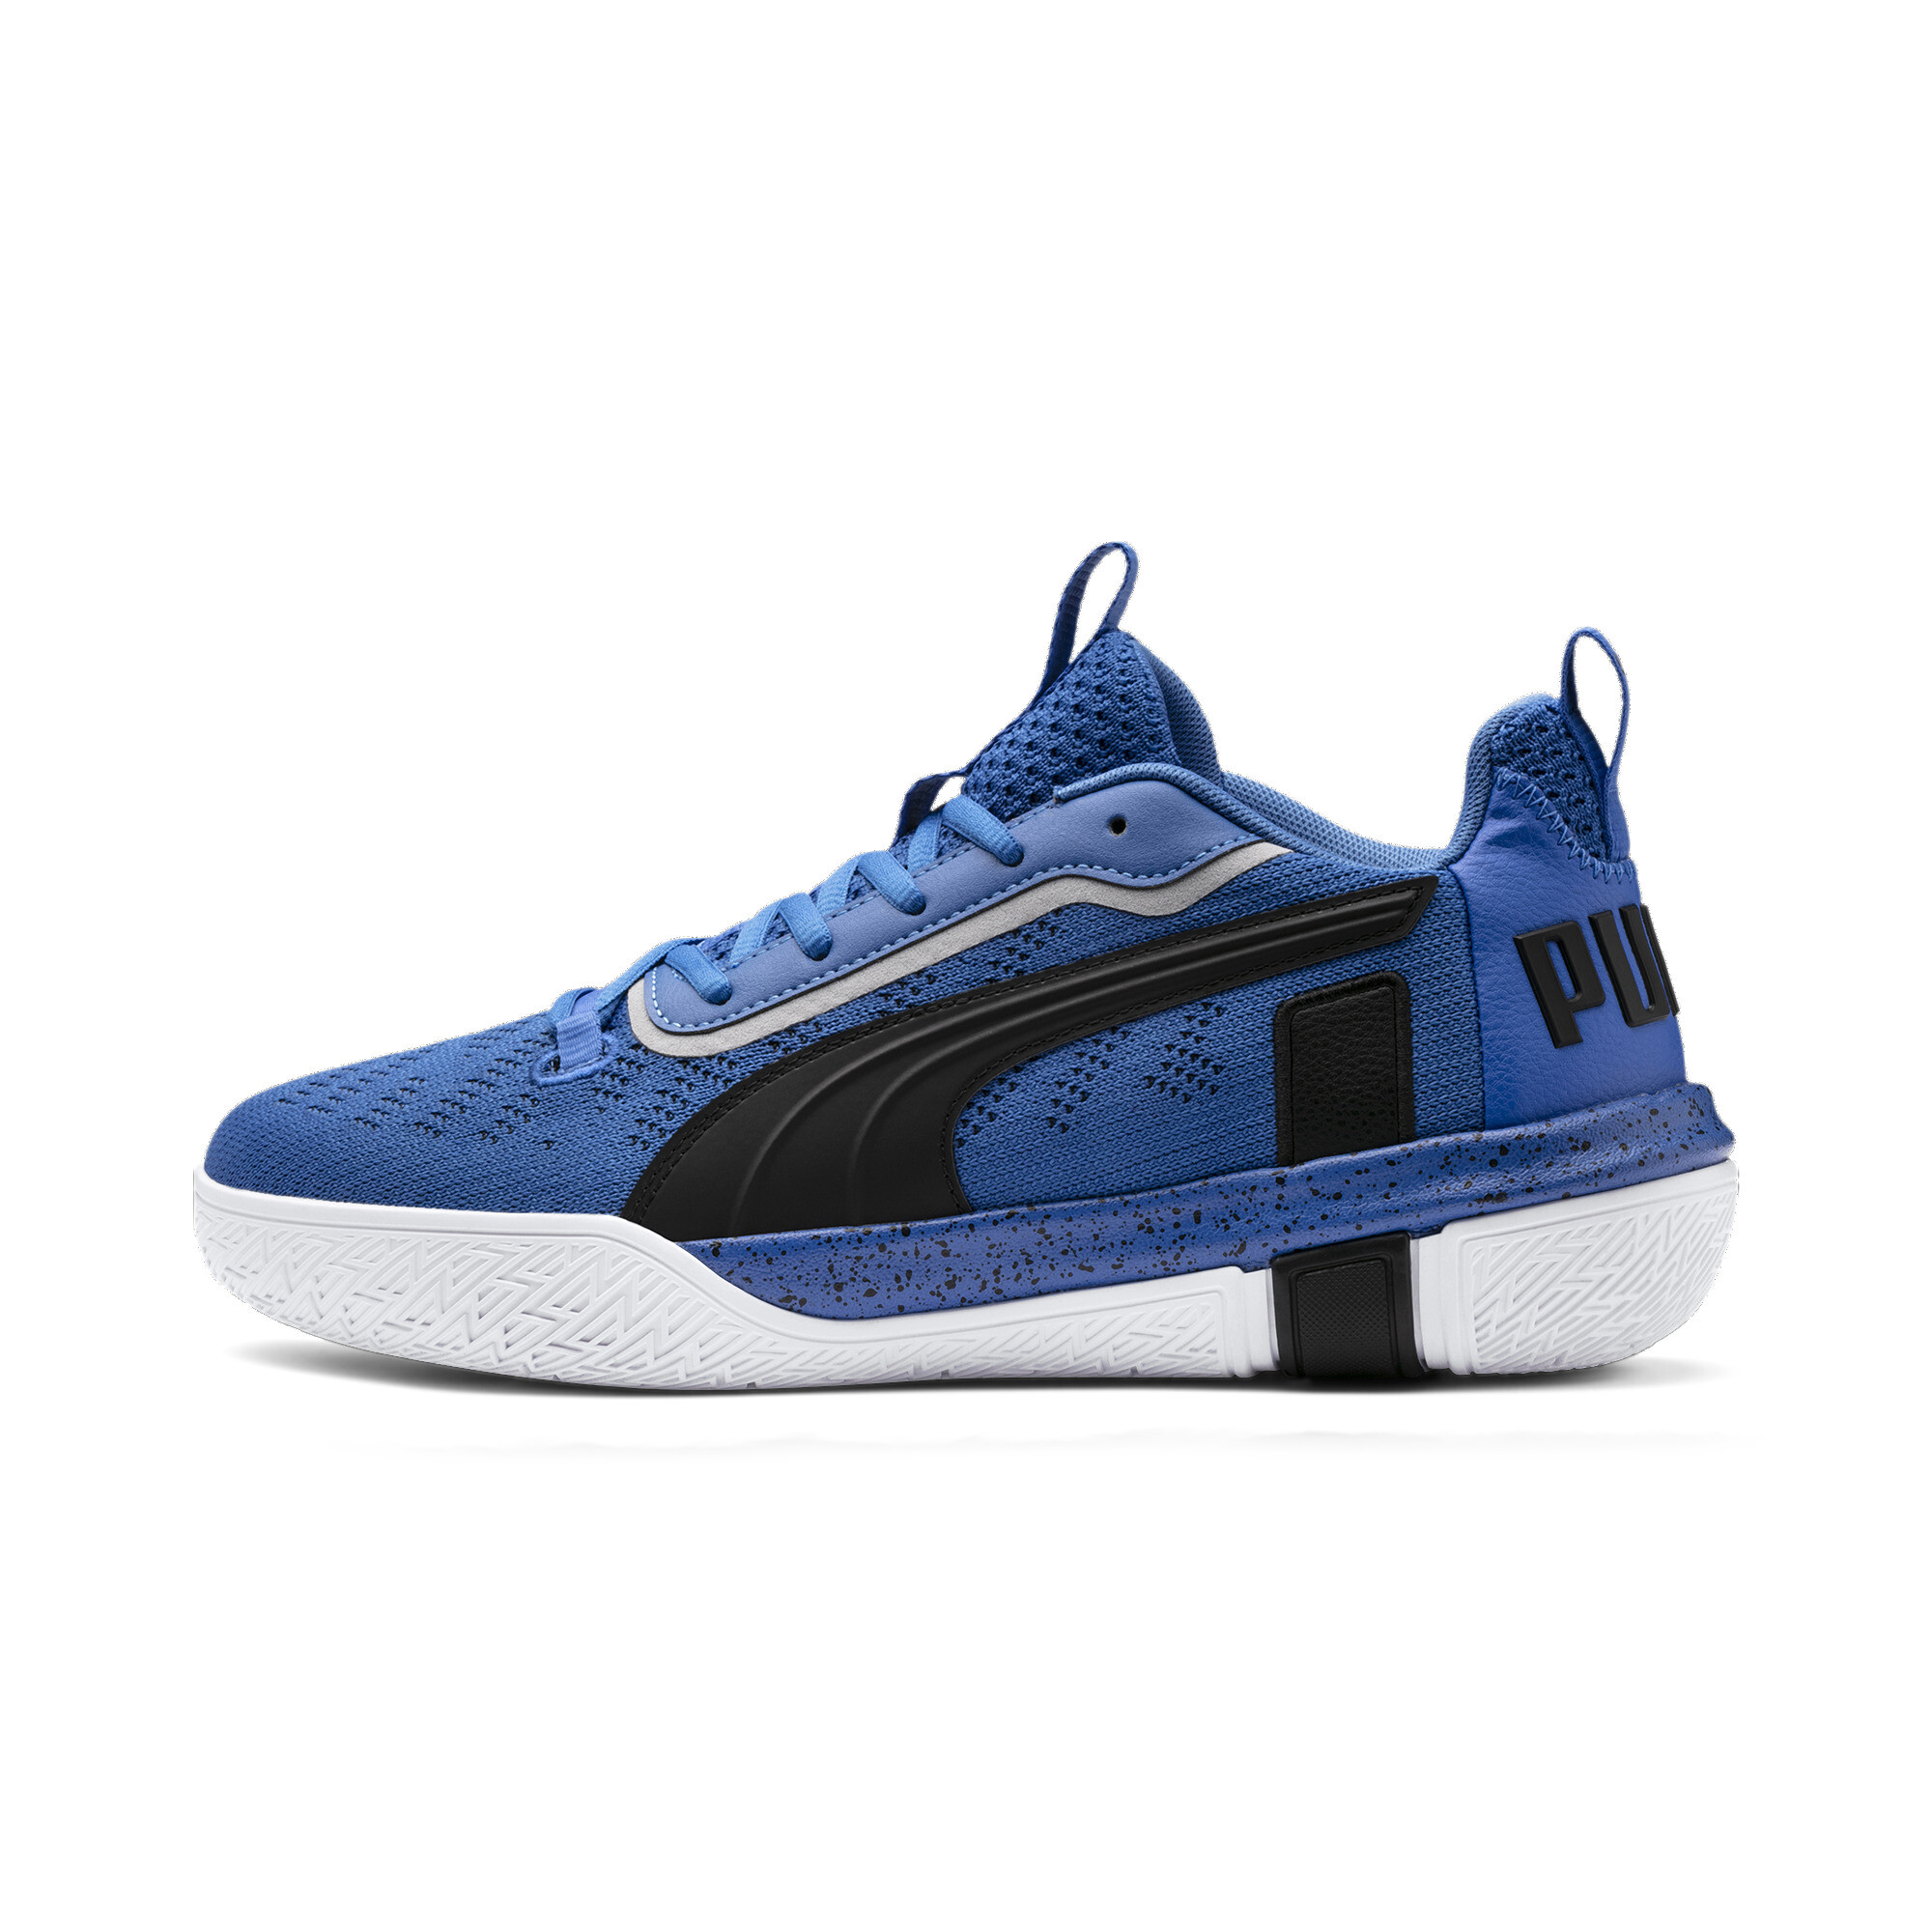 NEW Adidas kids basketball shoes PRO SPARK 2018 sz 12K | eBay